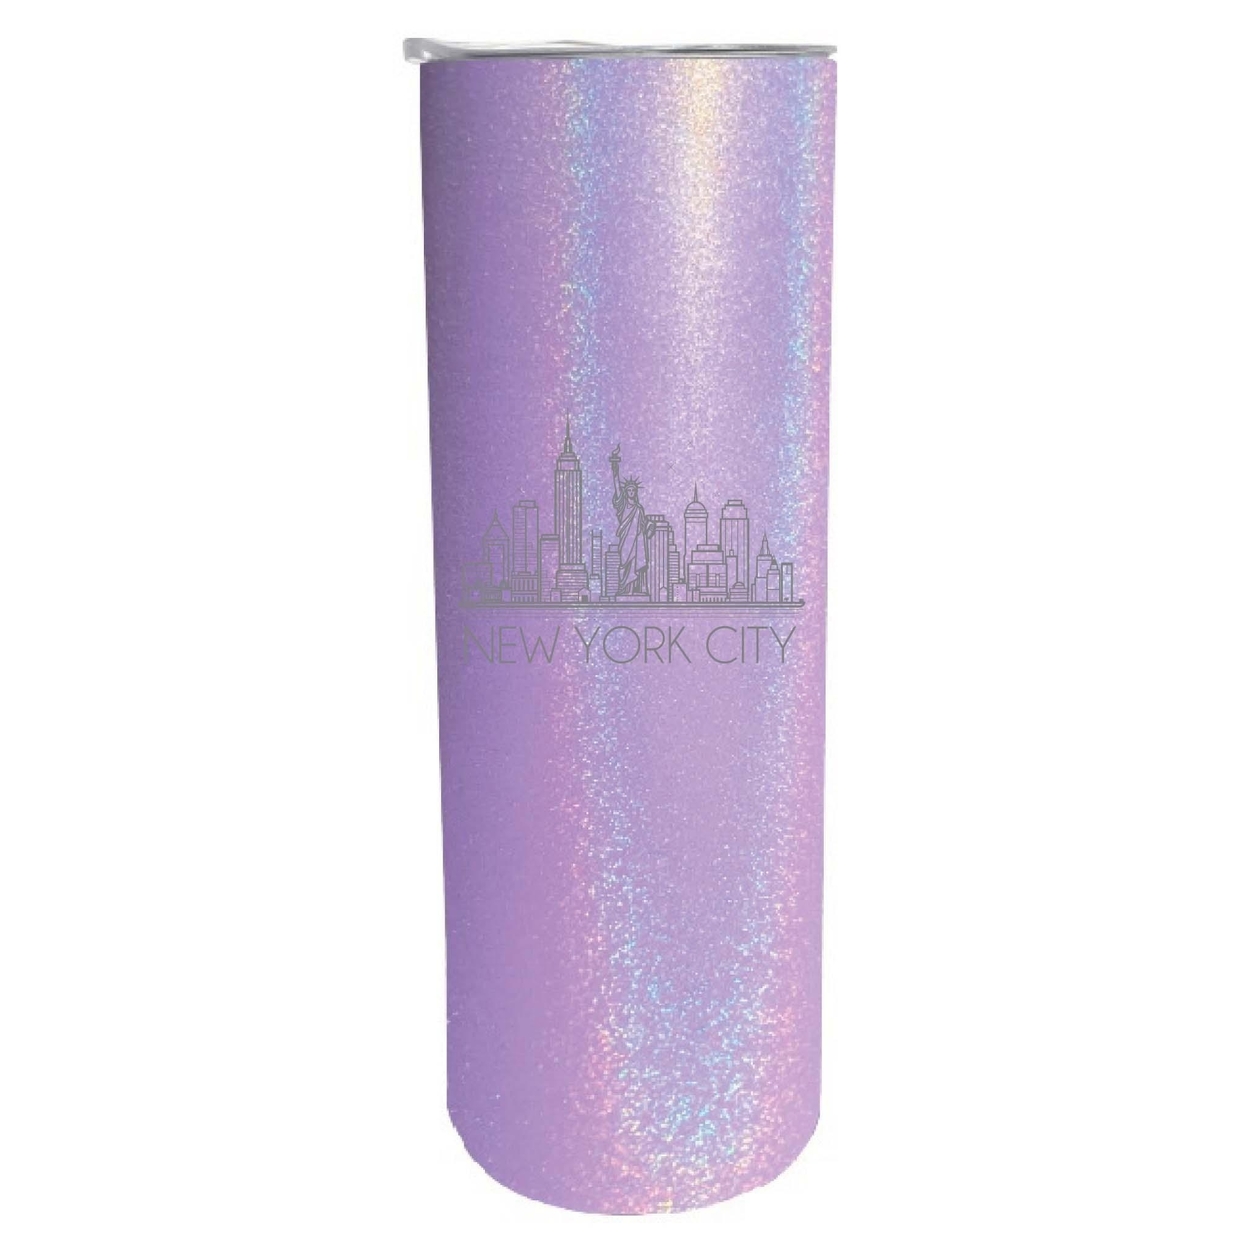 New York City Souvenir 20 Oz Engraved Insulated Skinny Tumbler Glitter - Purple Glitter,,2-Pack